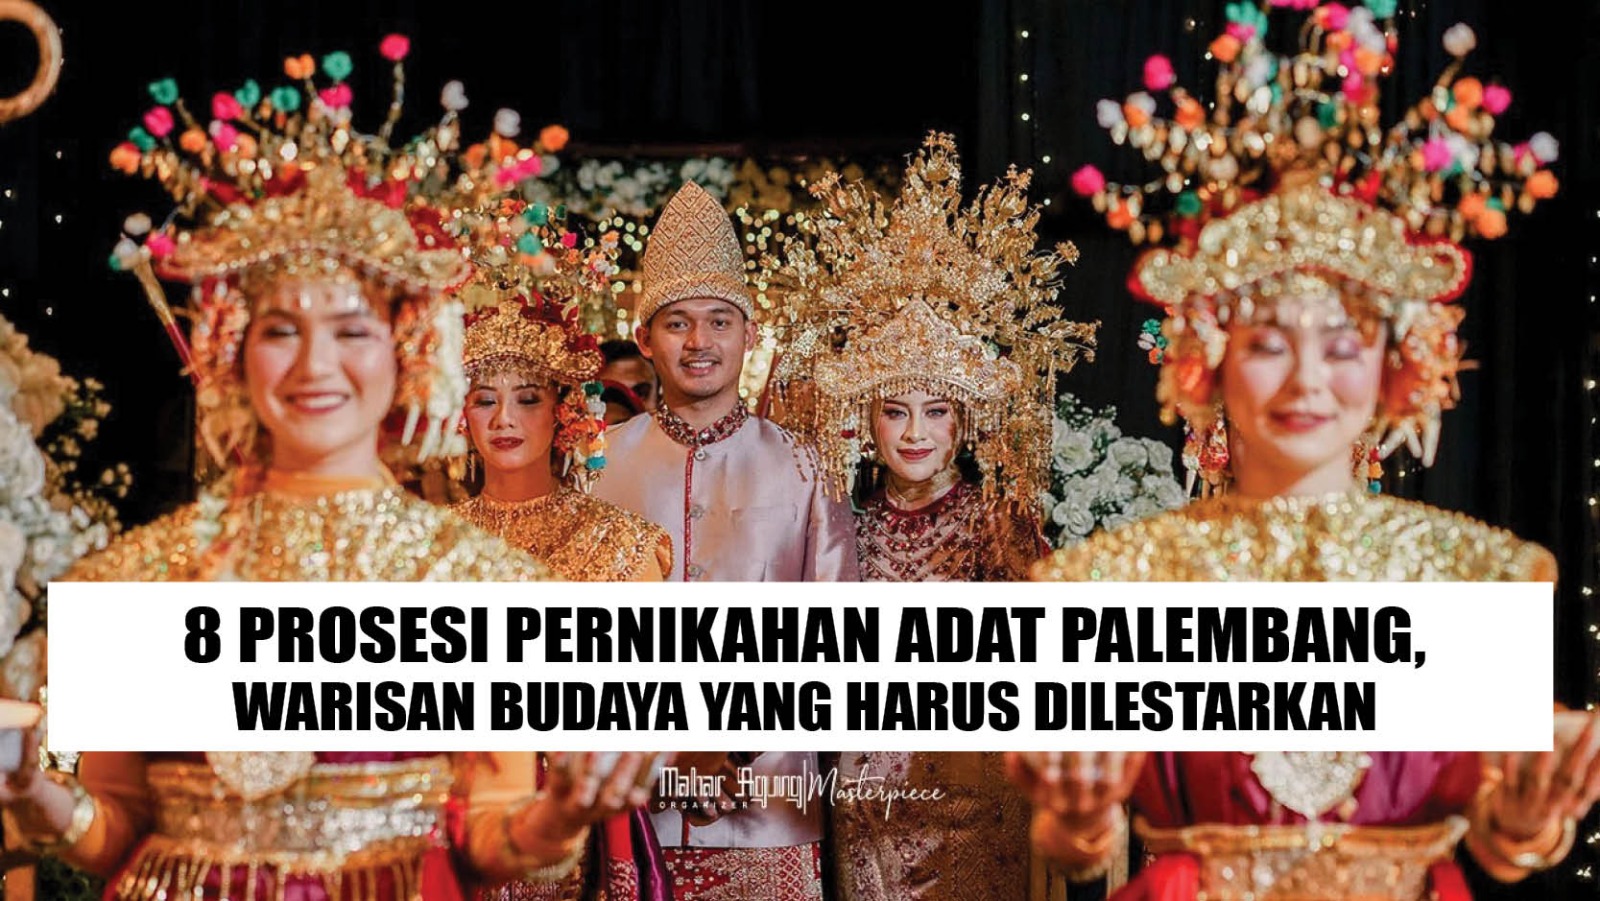 8 Prosesi Pernikahan Adat Palembang, Warisan Budaya yang Harus Dilestarikan